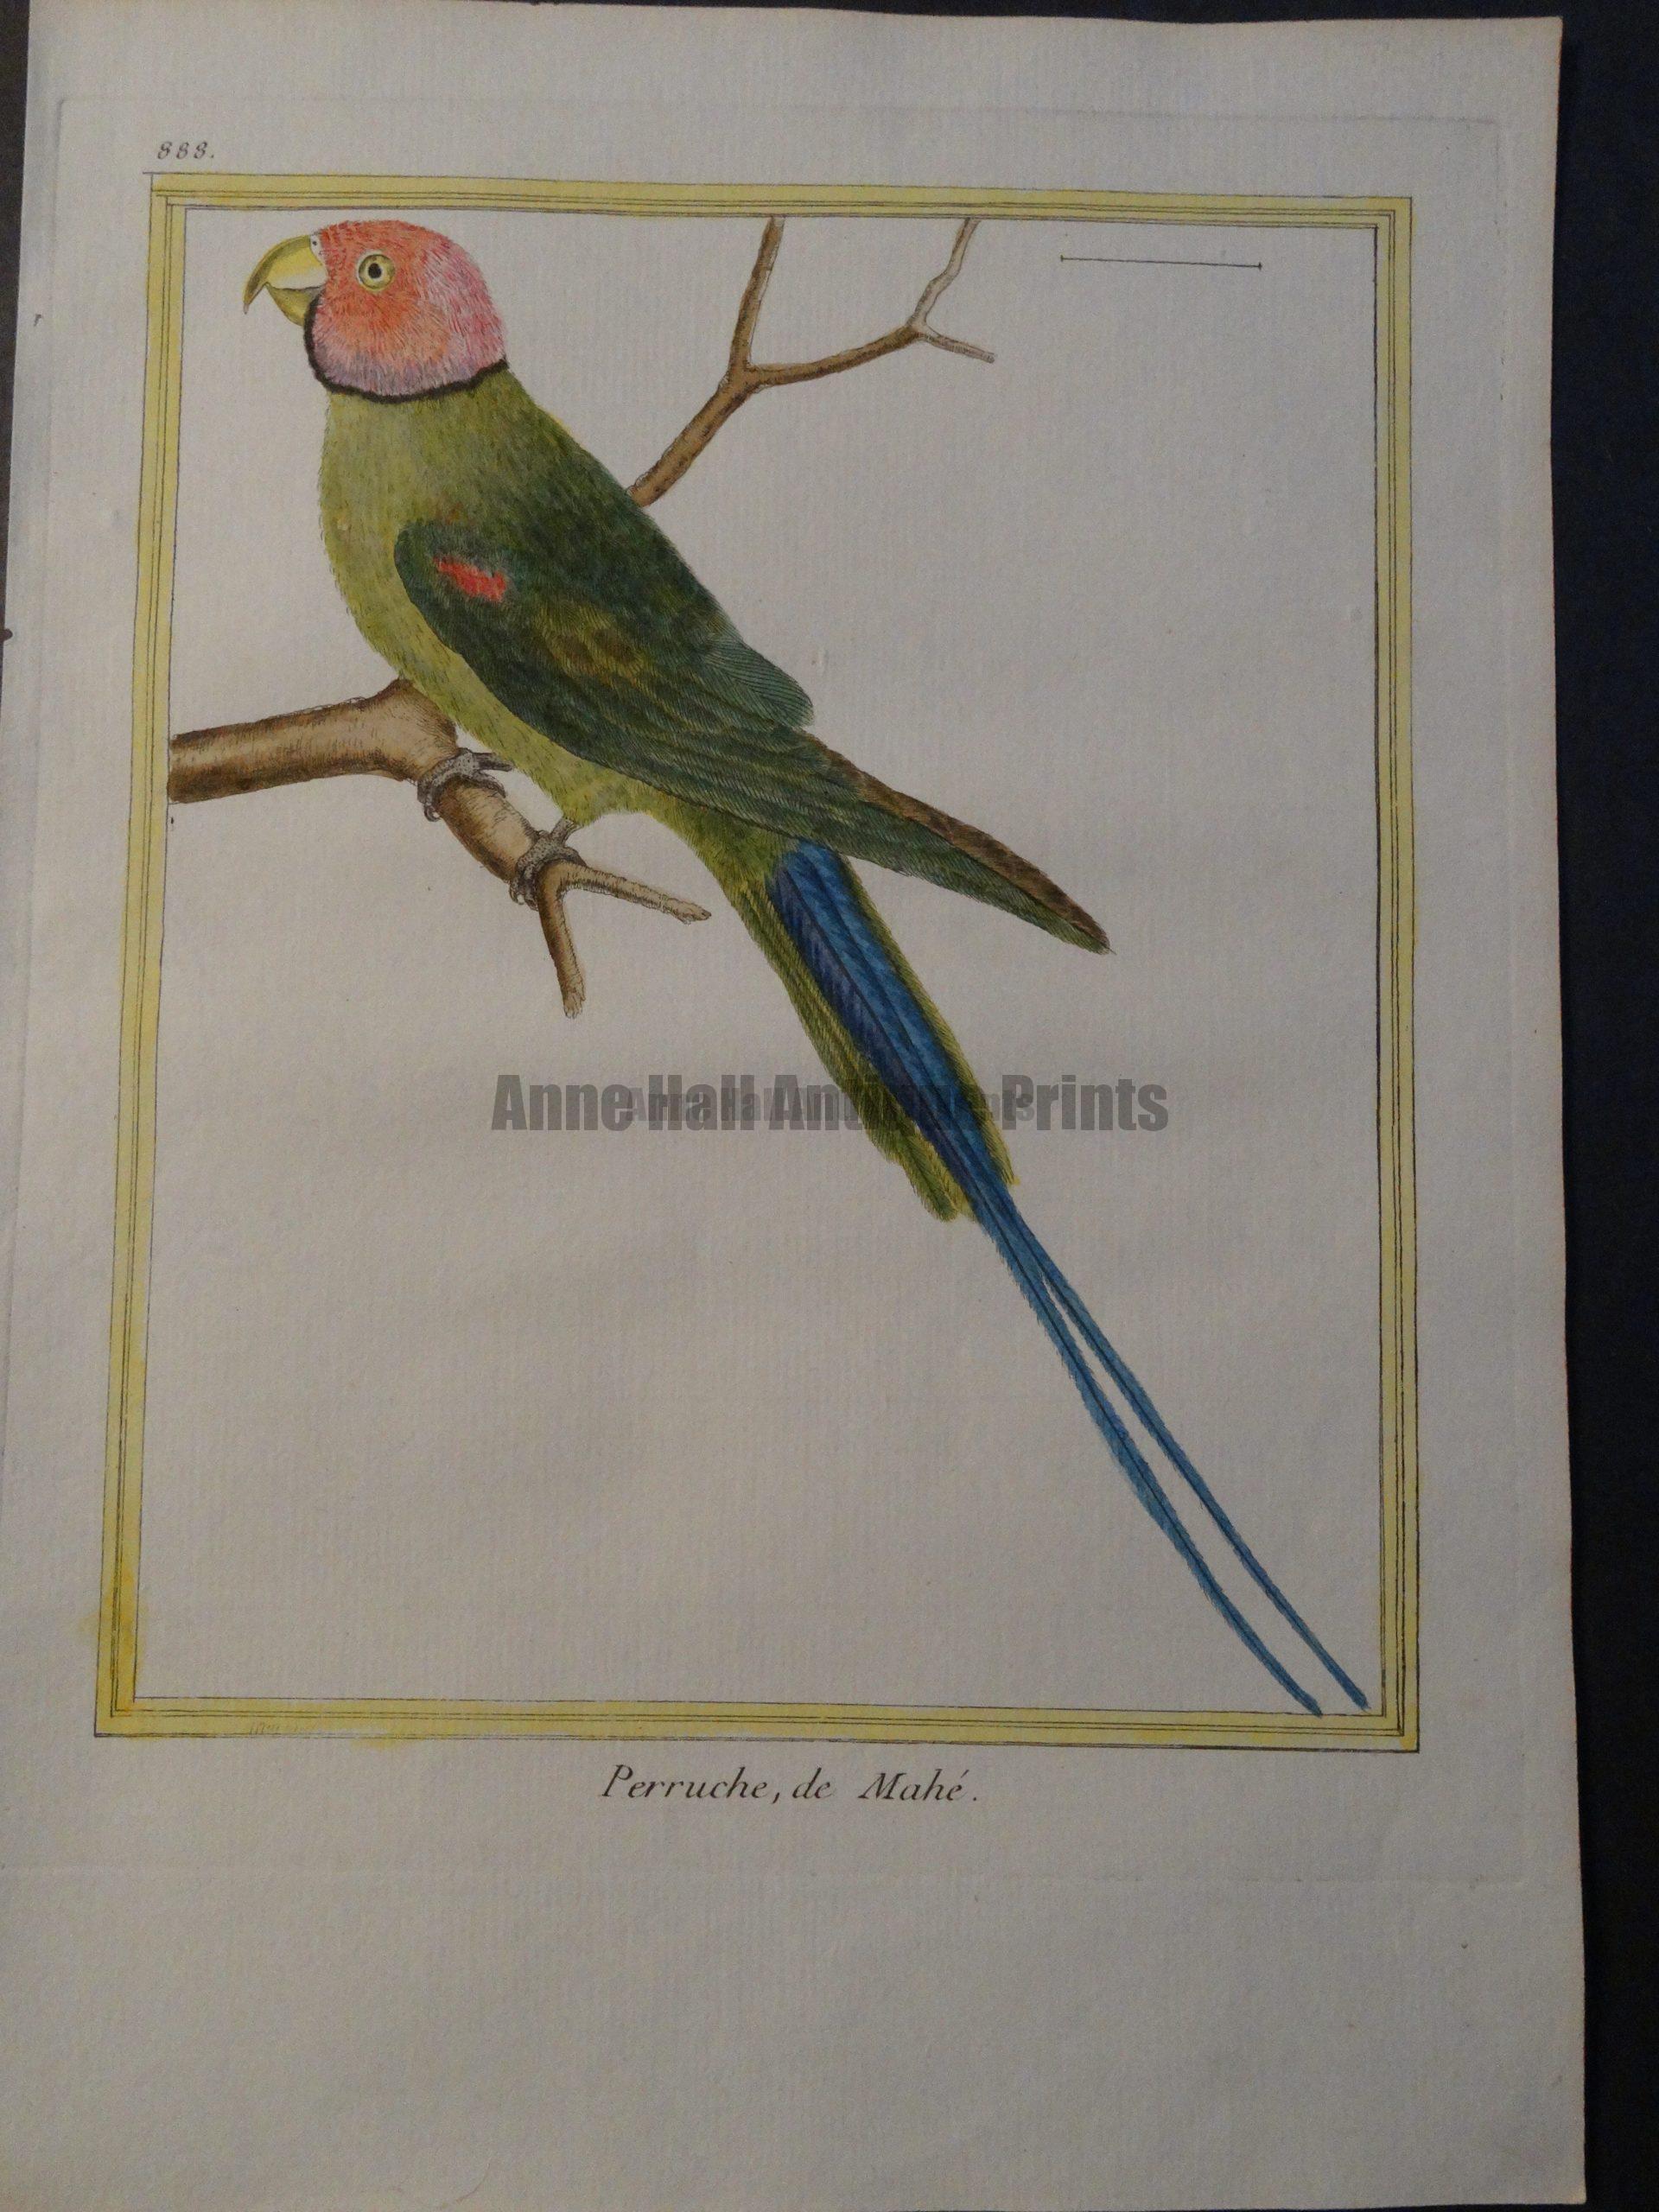 Parrot Martinet Perruche du Mahe Plate 888